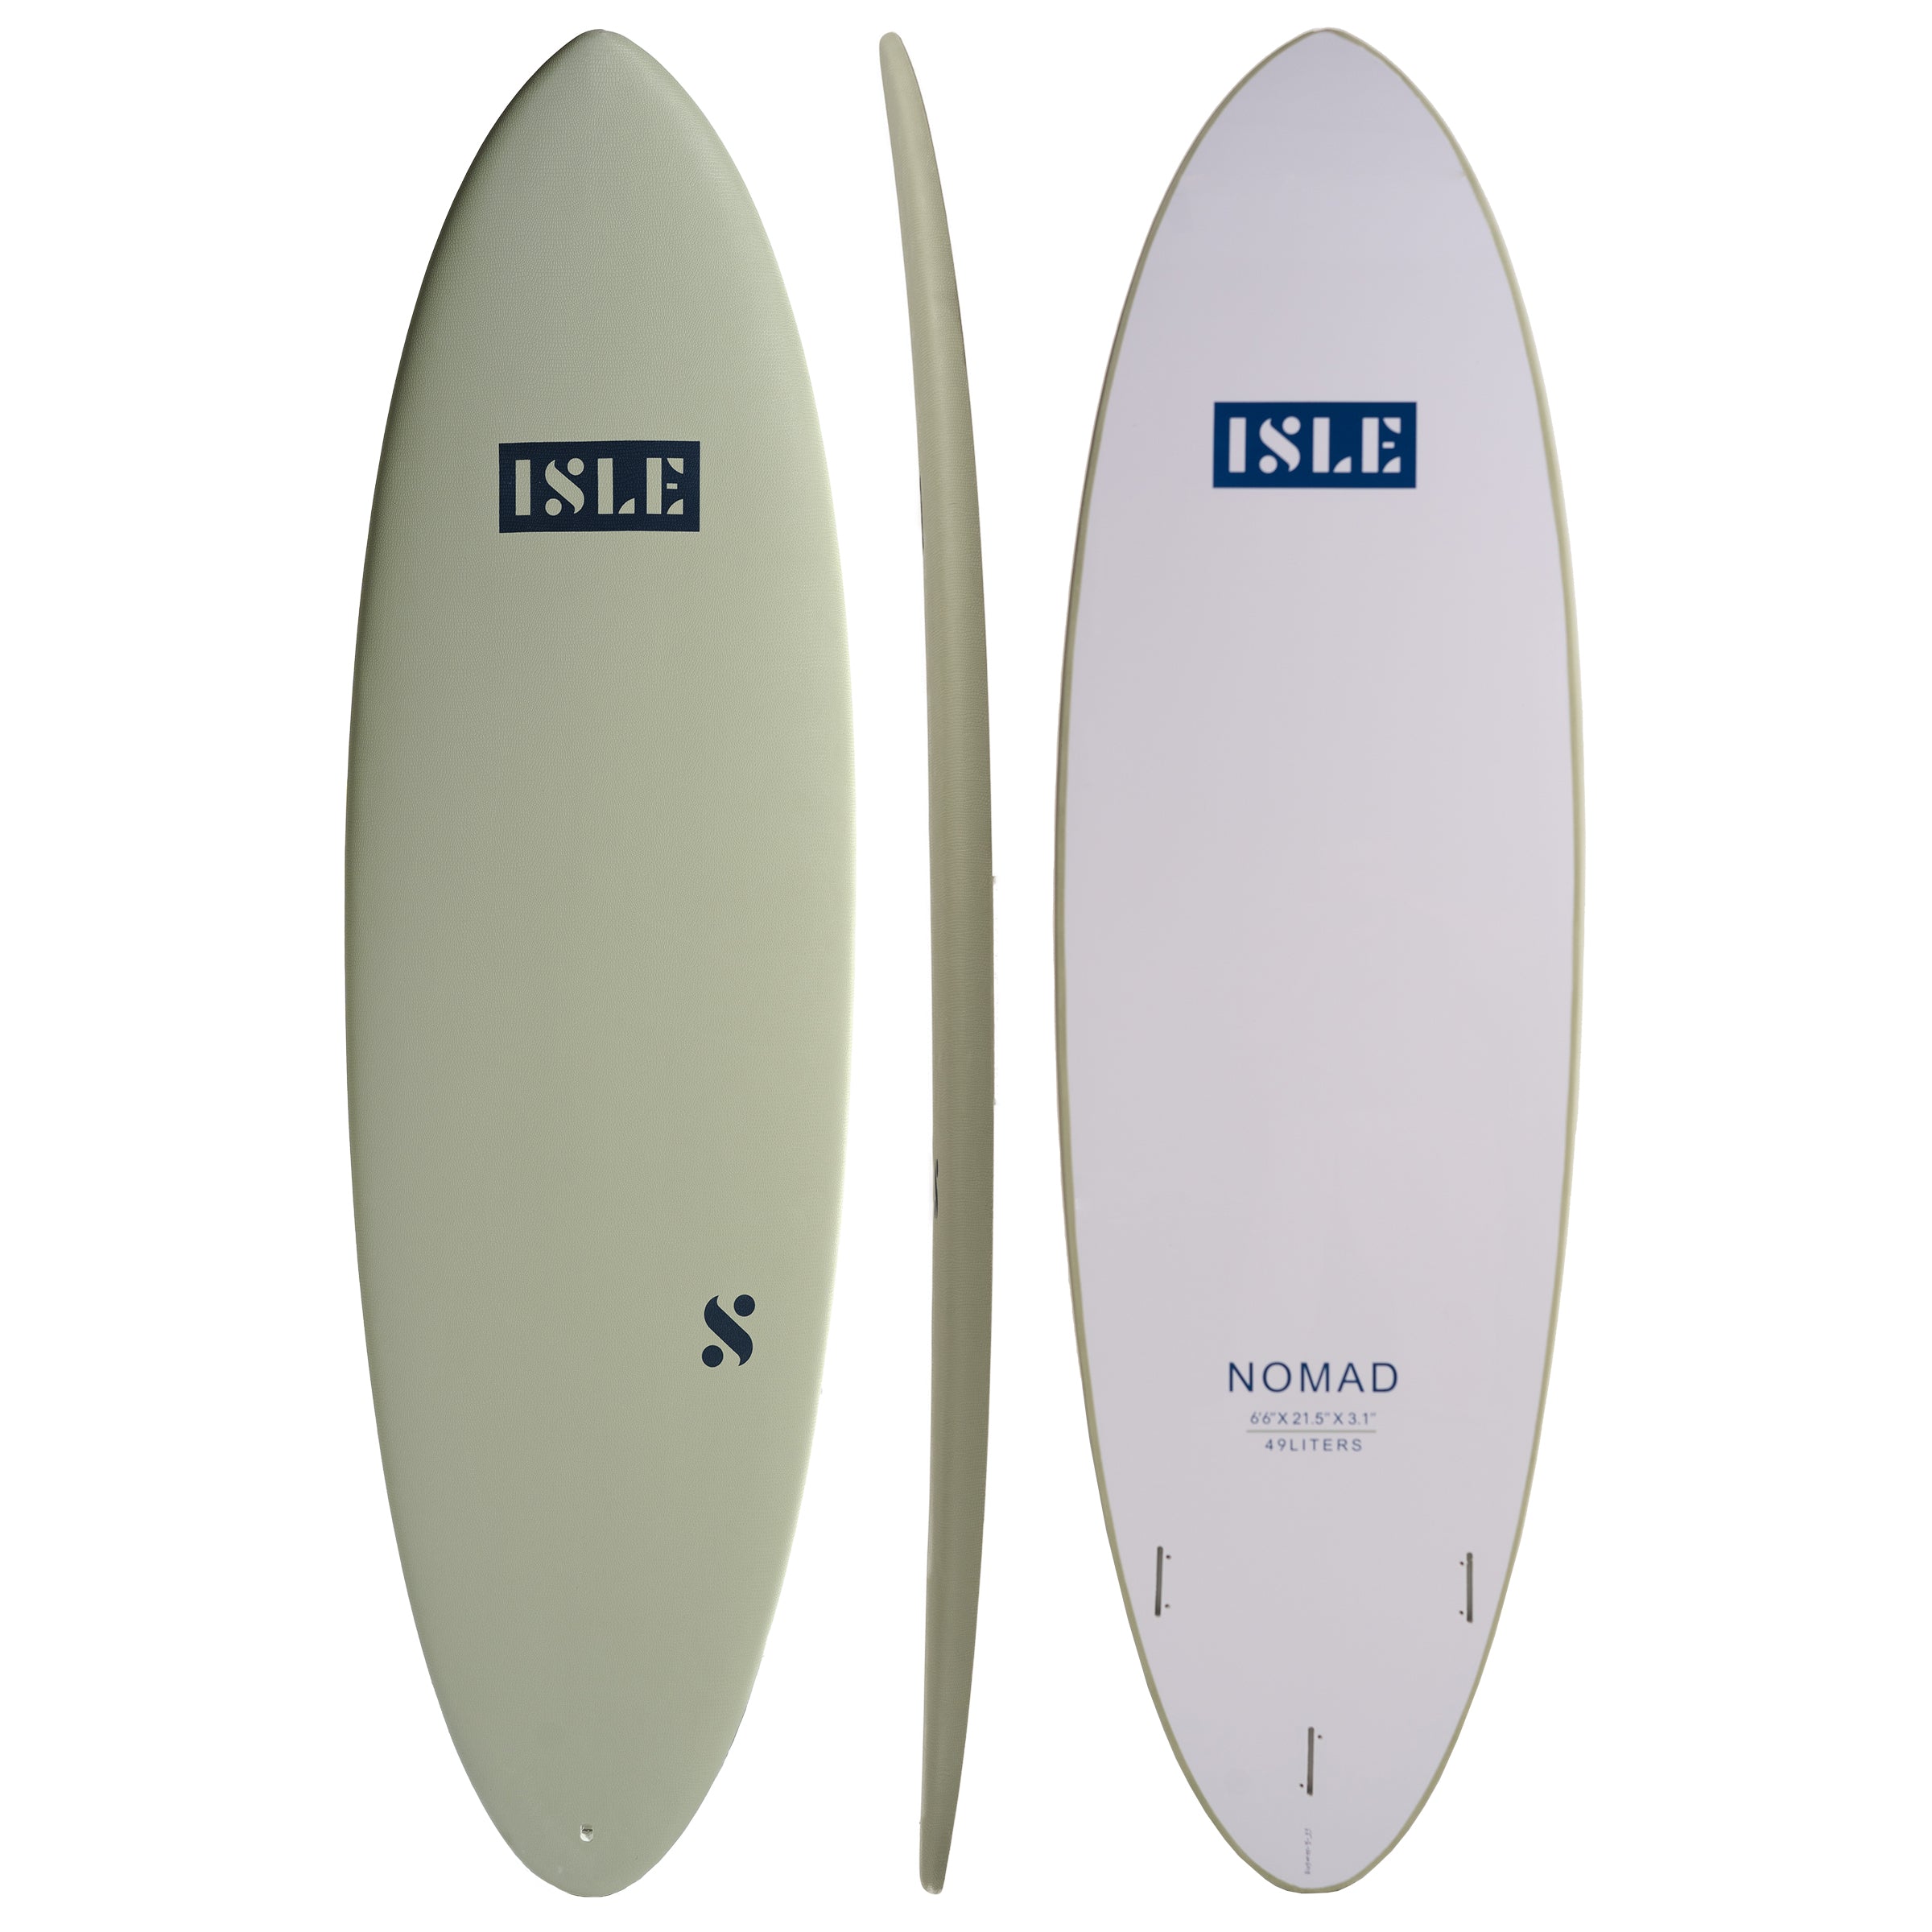 Nomad Soft Top Surfboard in Seafoam